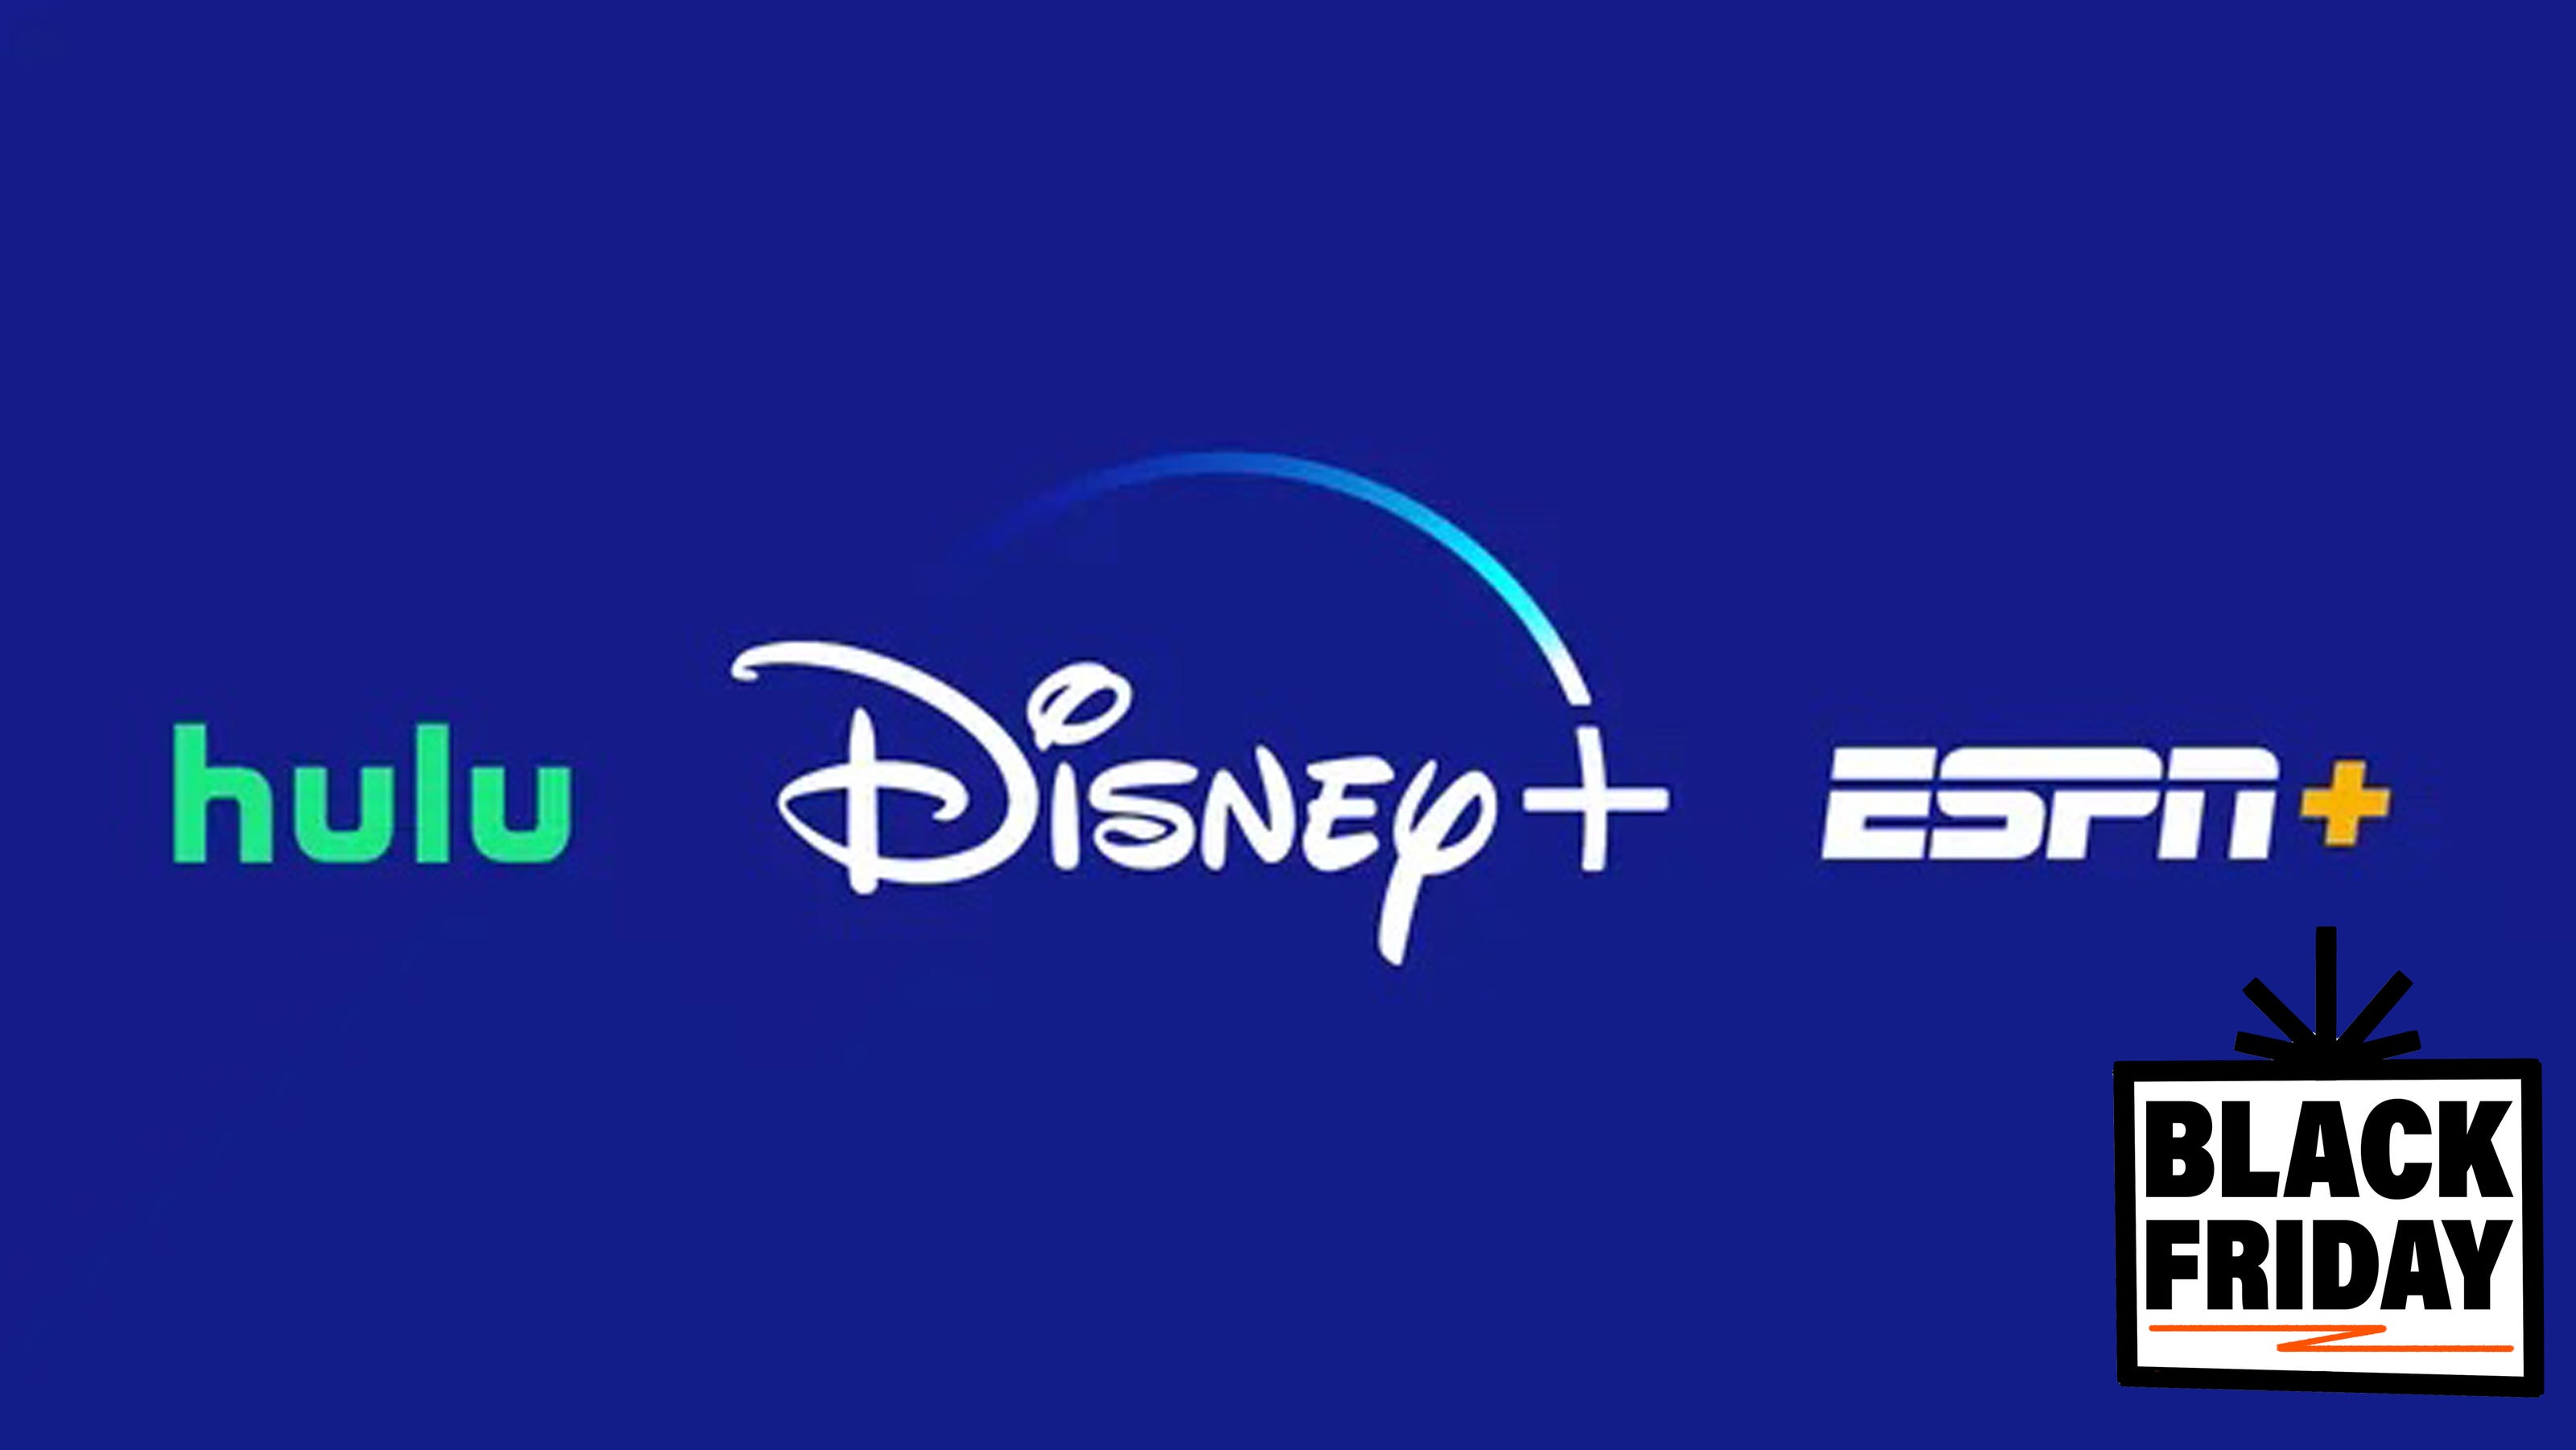 Disney+ bundle deal Get Disney+, Hulu and ESPN+ for up to 30 off